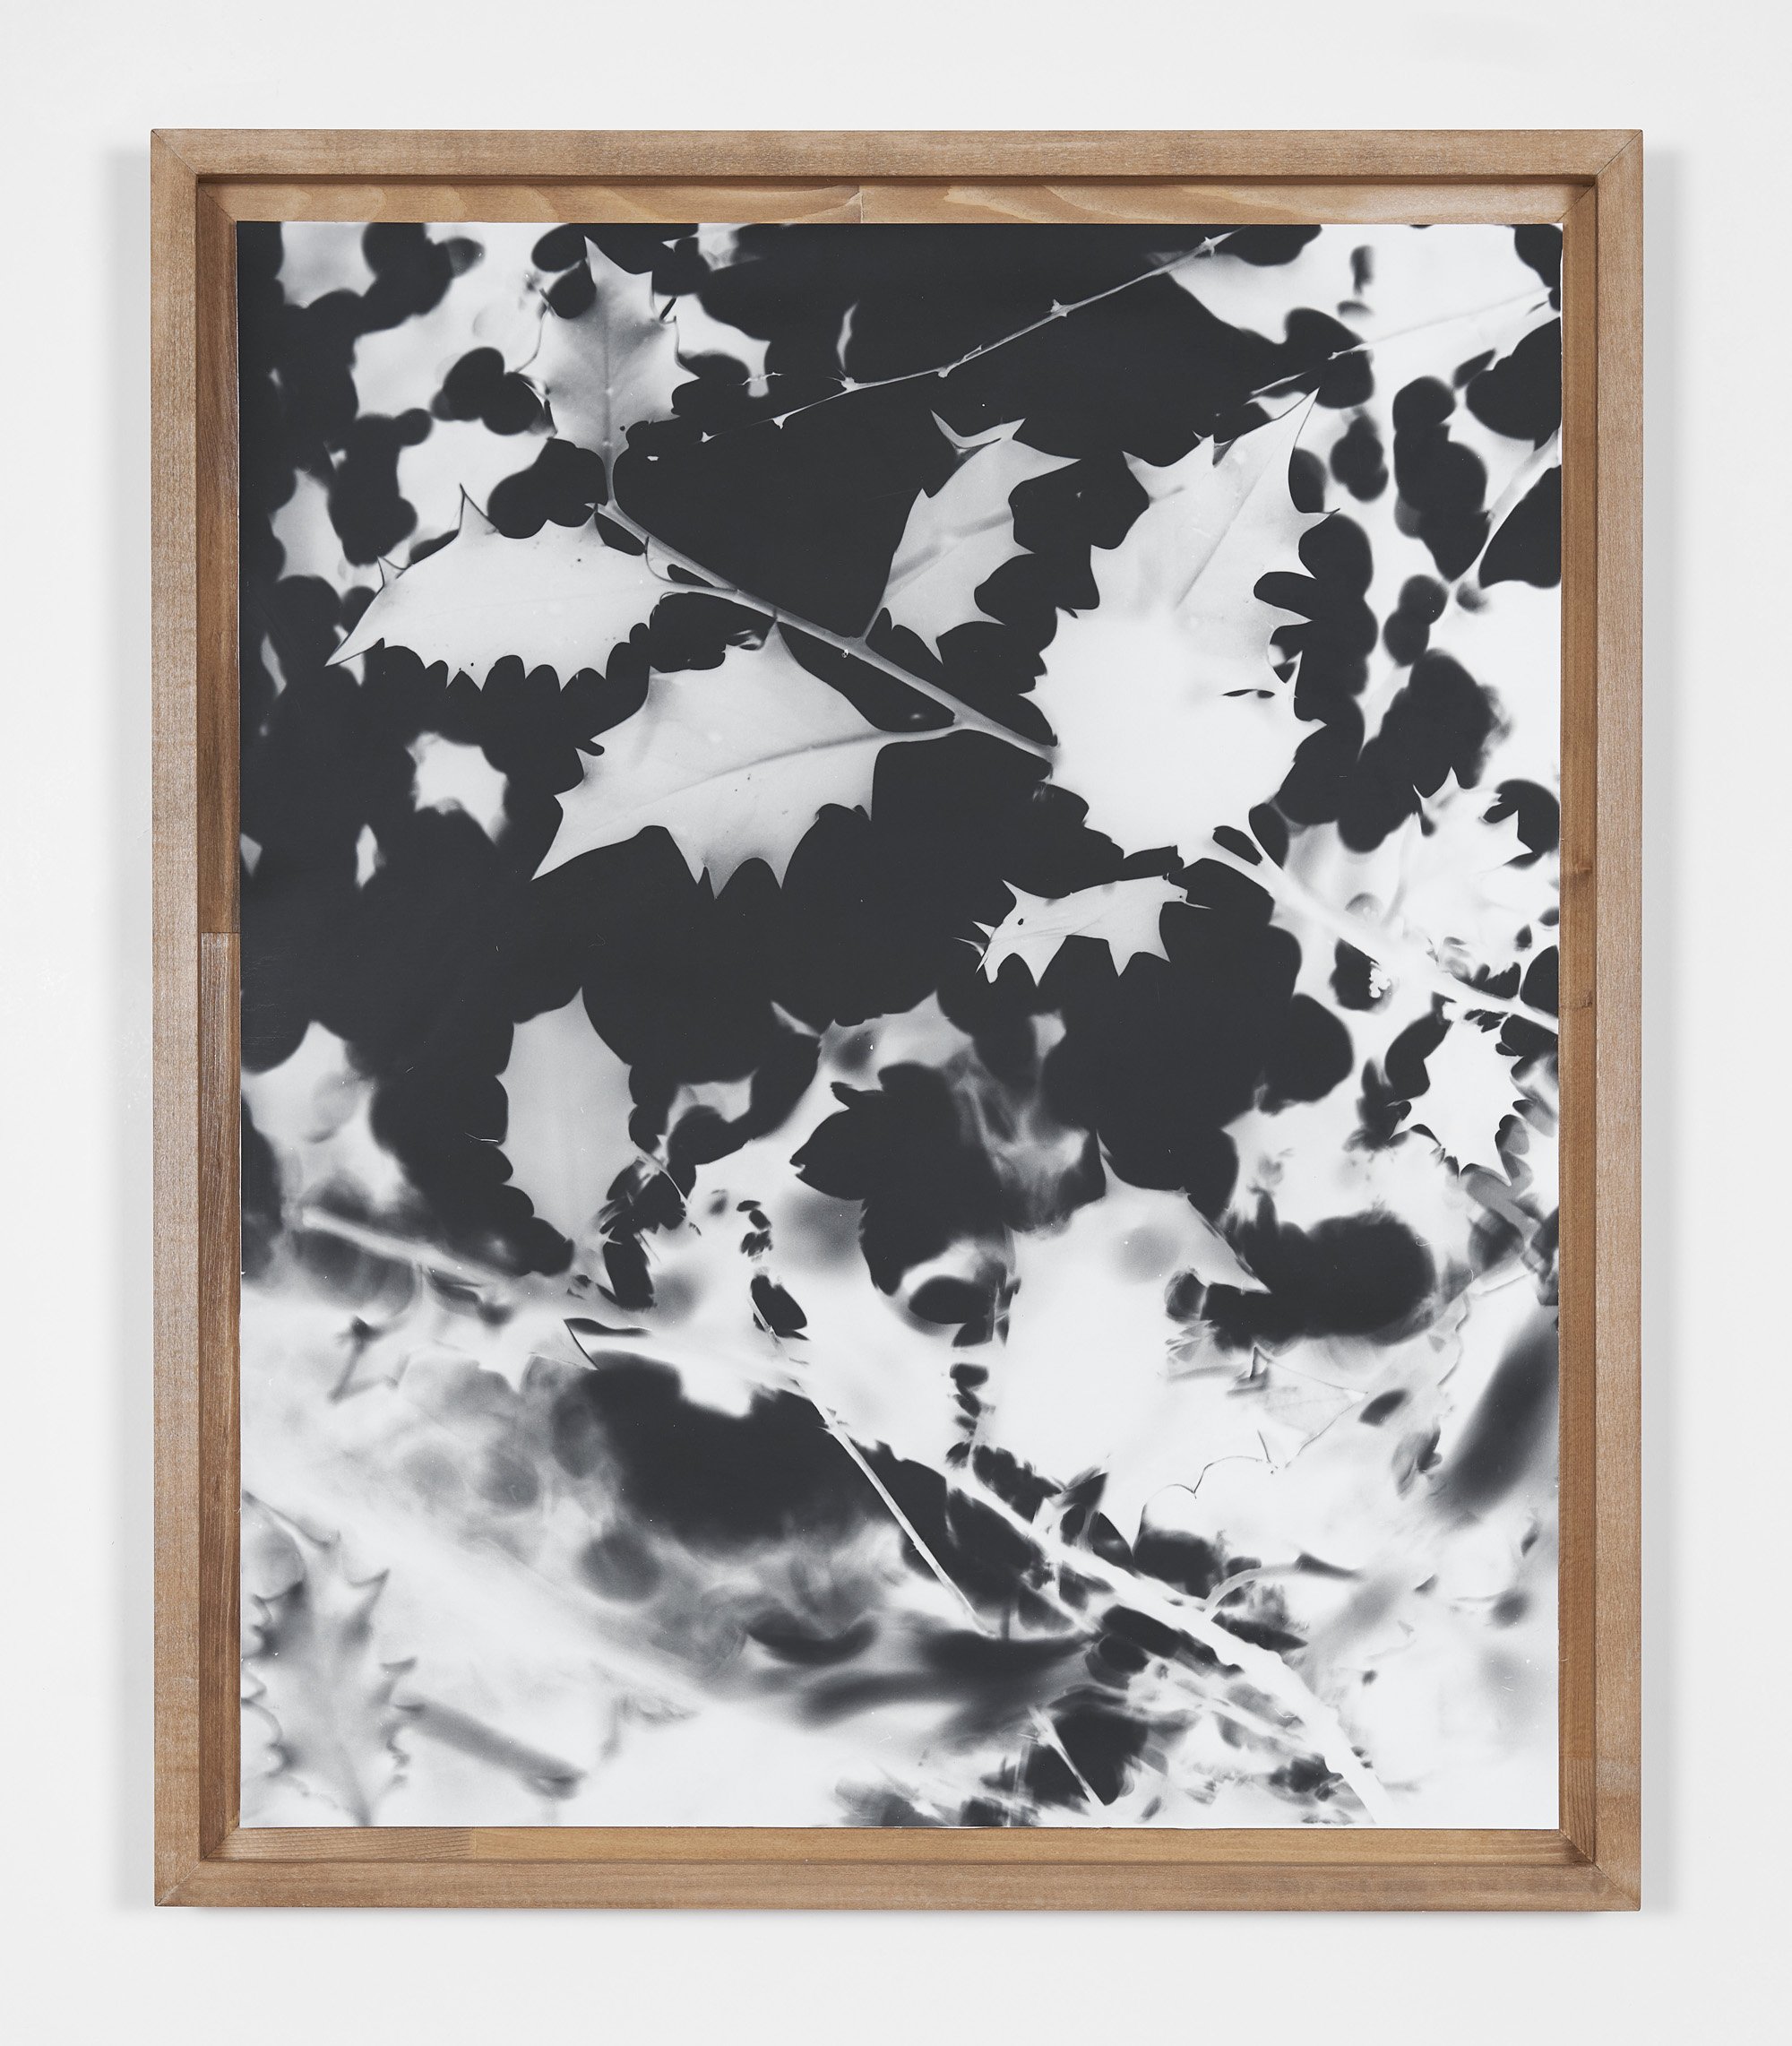  Hollybush 2022-22  Fibre based silver gelatin print in linden frame  58 x 48.6 cm  1/2 